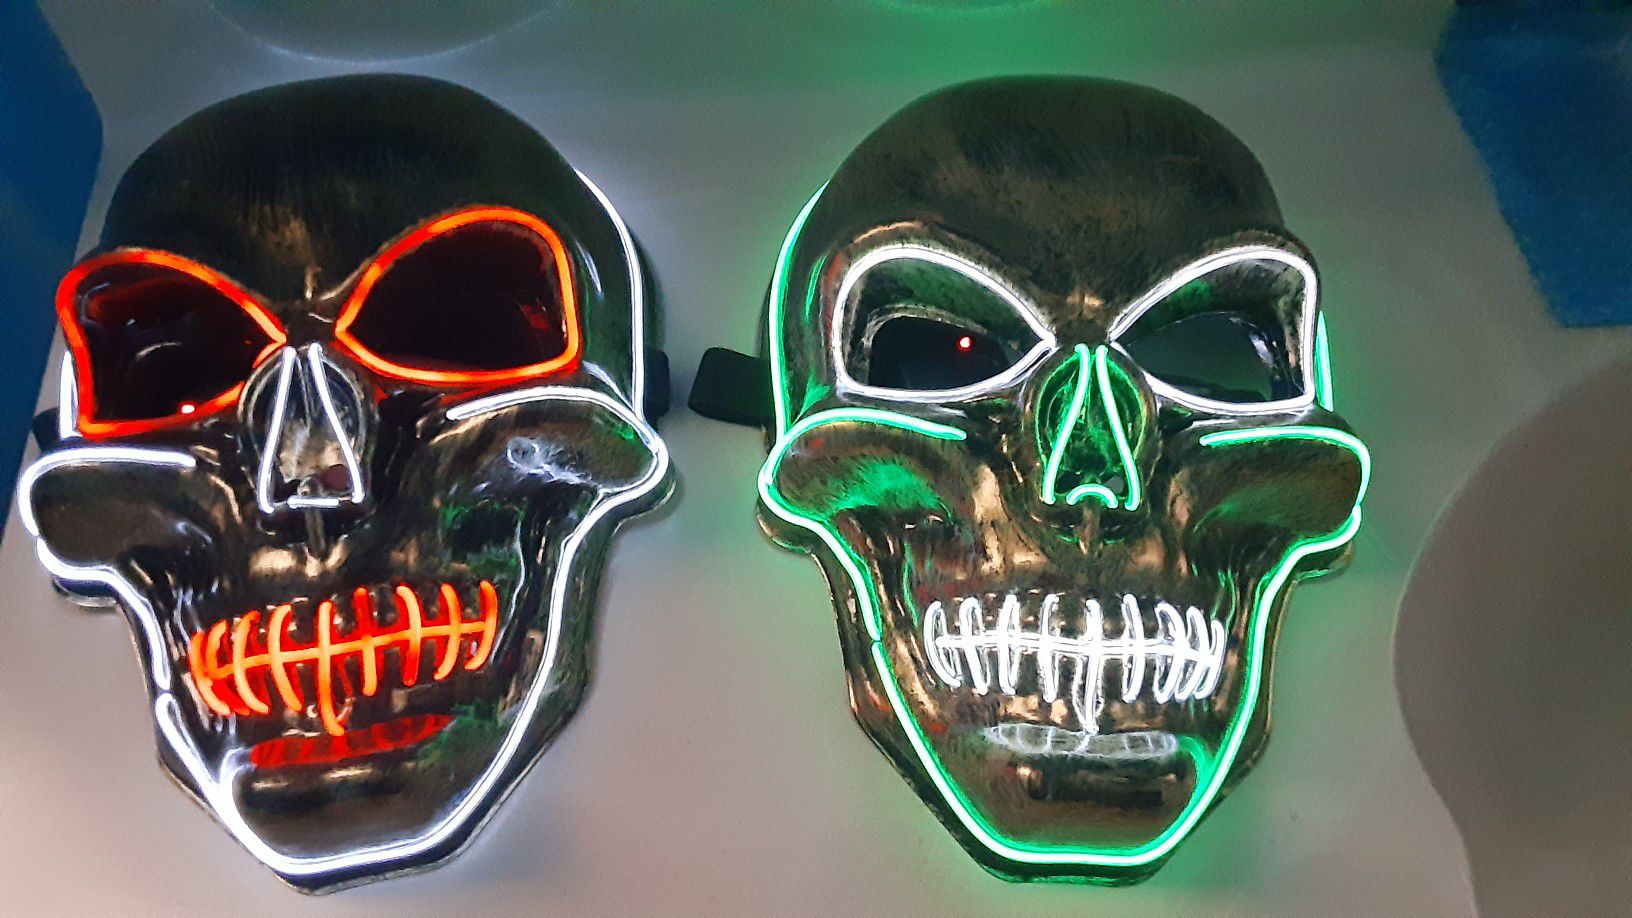 LED Halloween Mask Brand New $10 Each